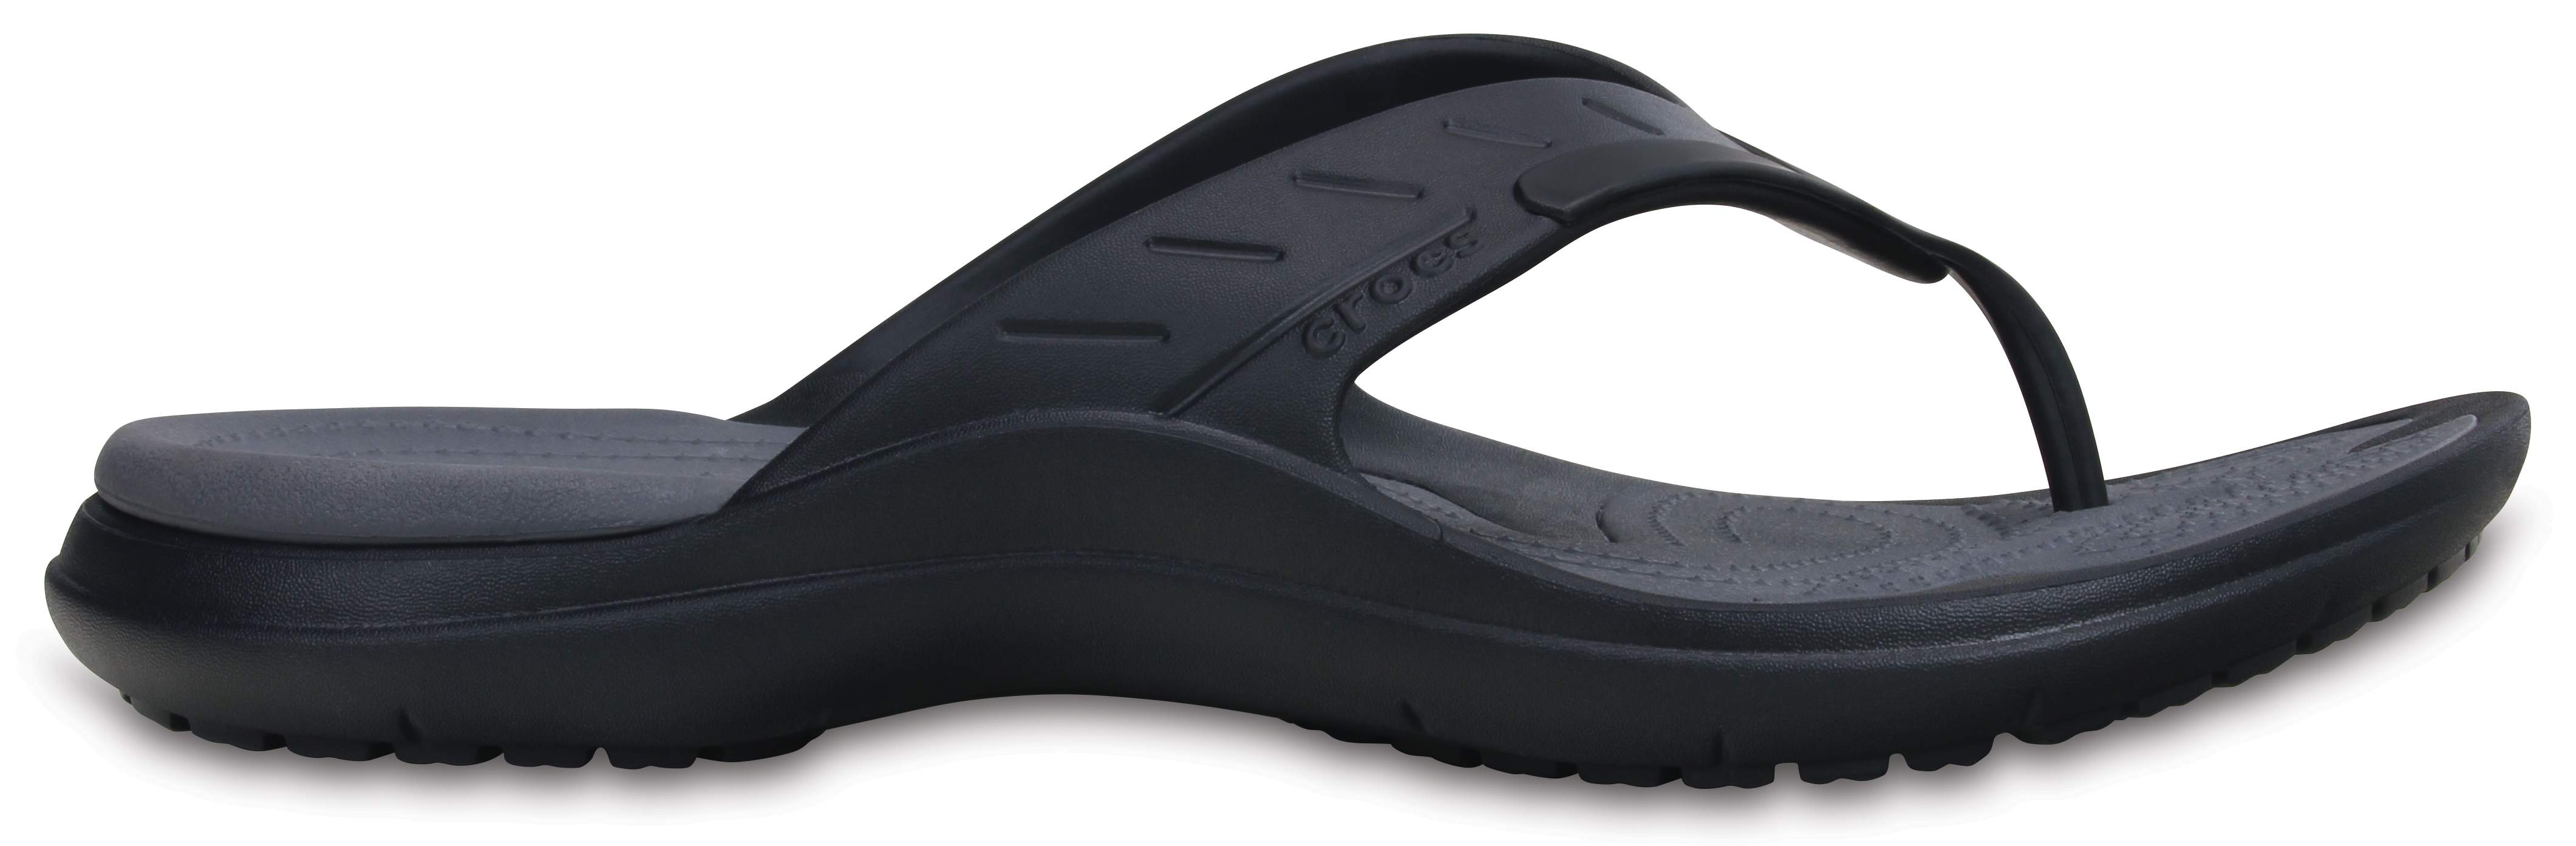 crocs modi sport flip flop sandal